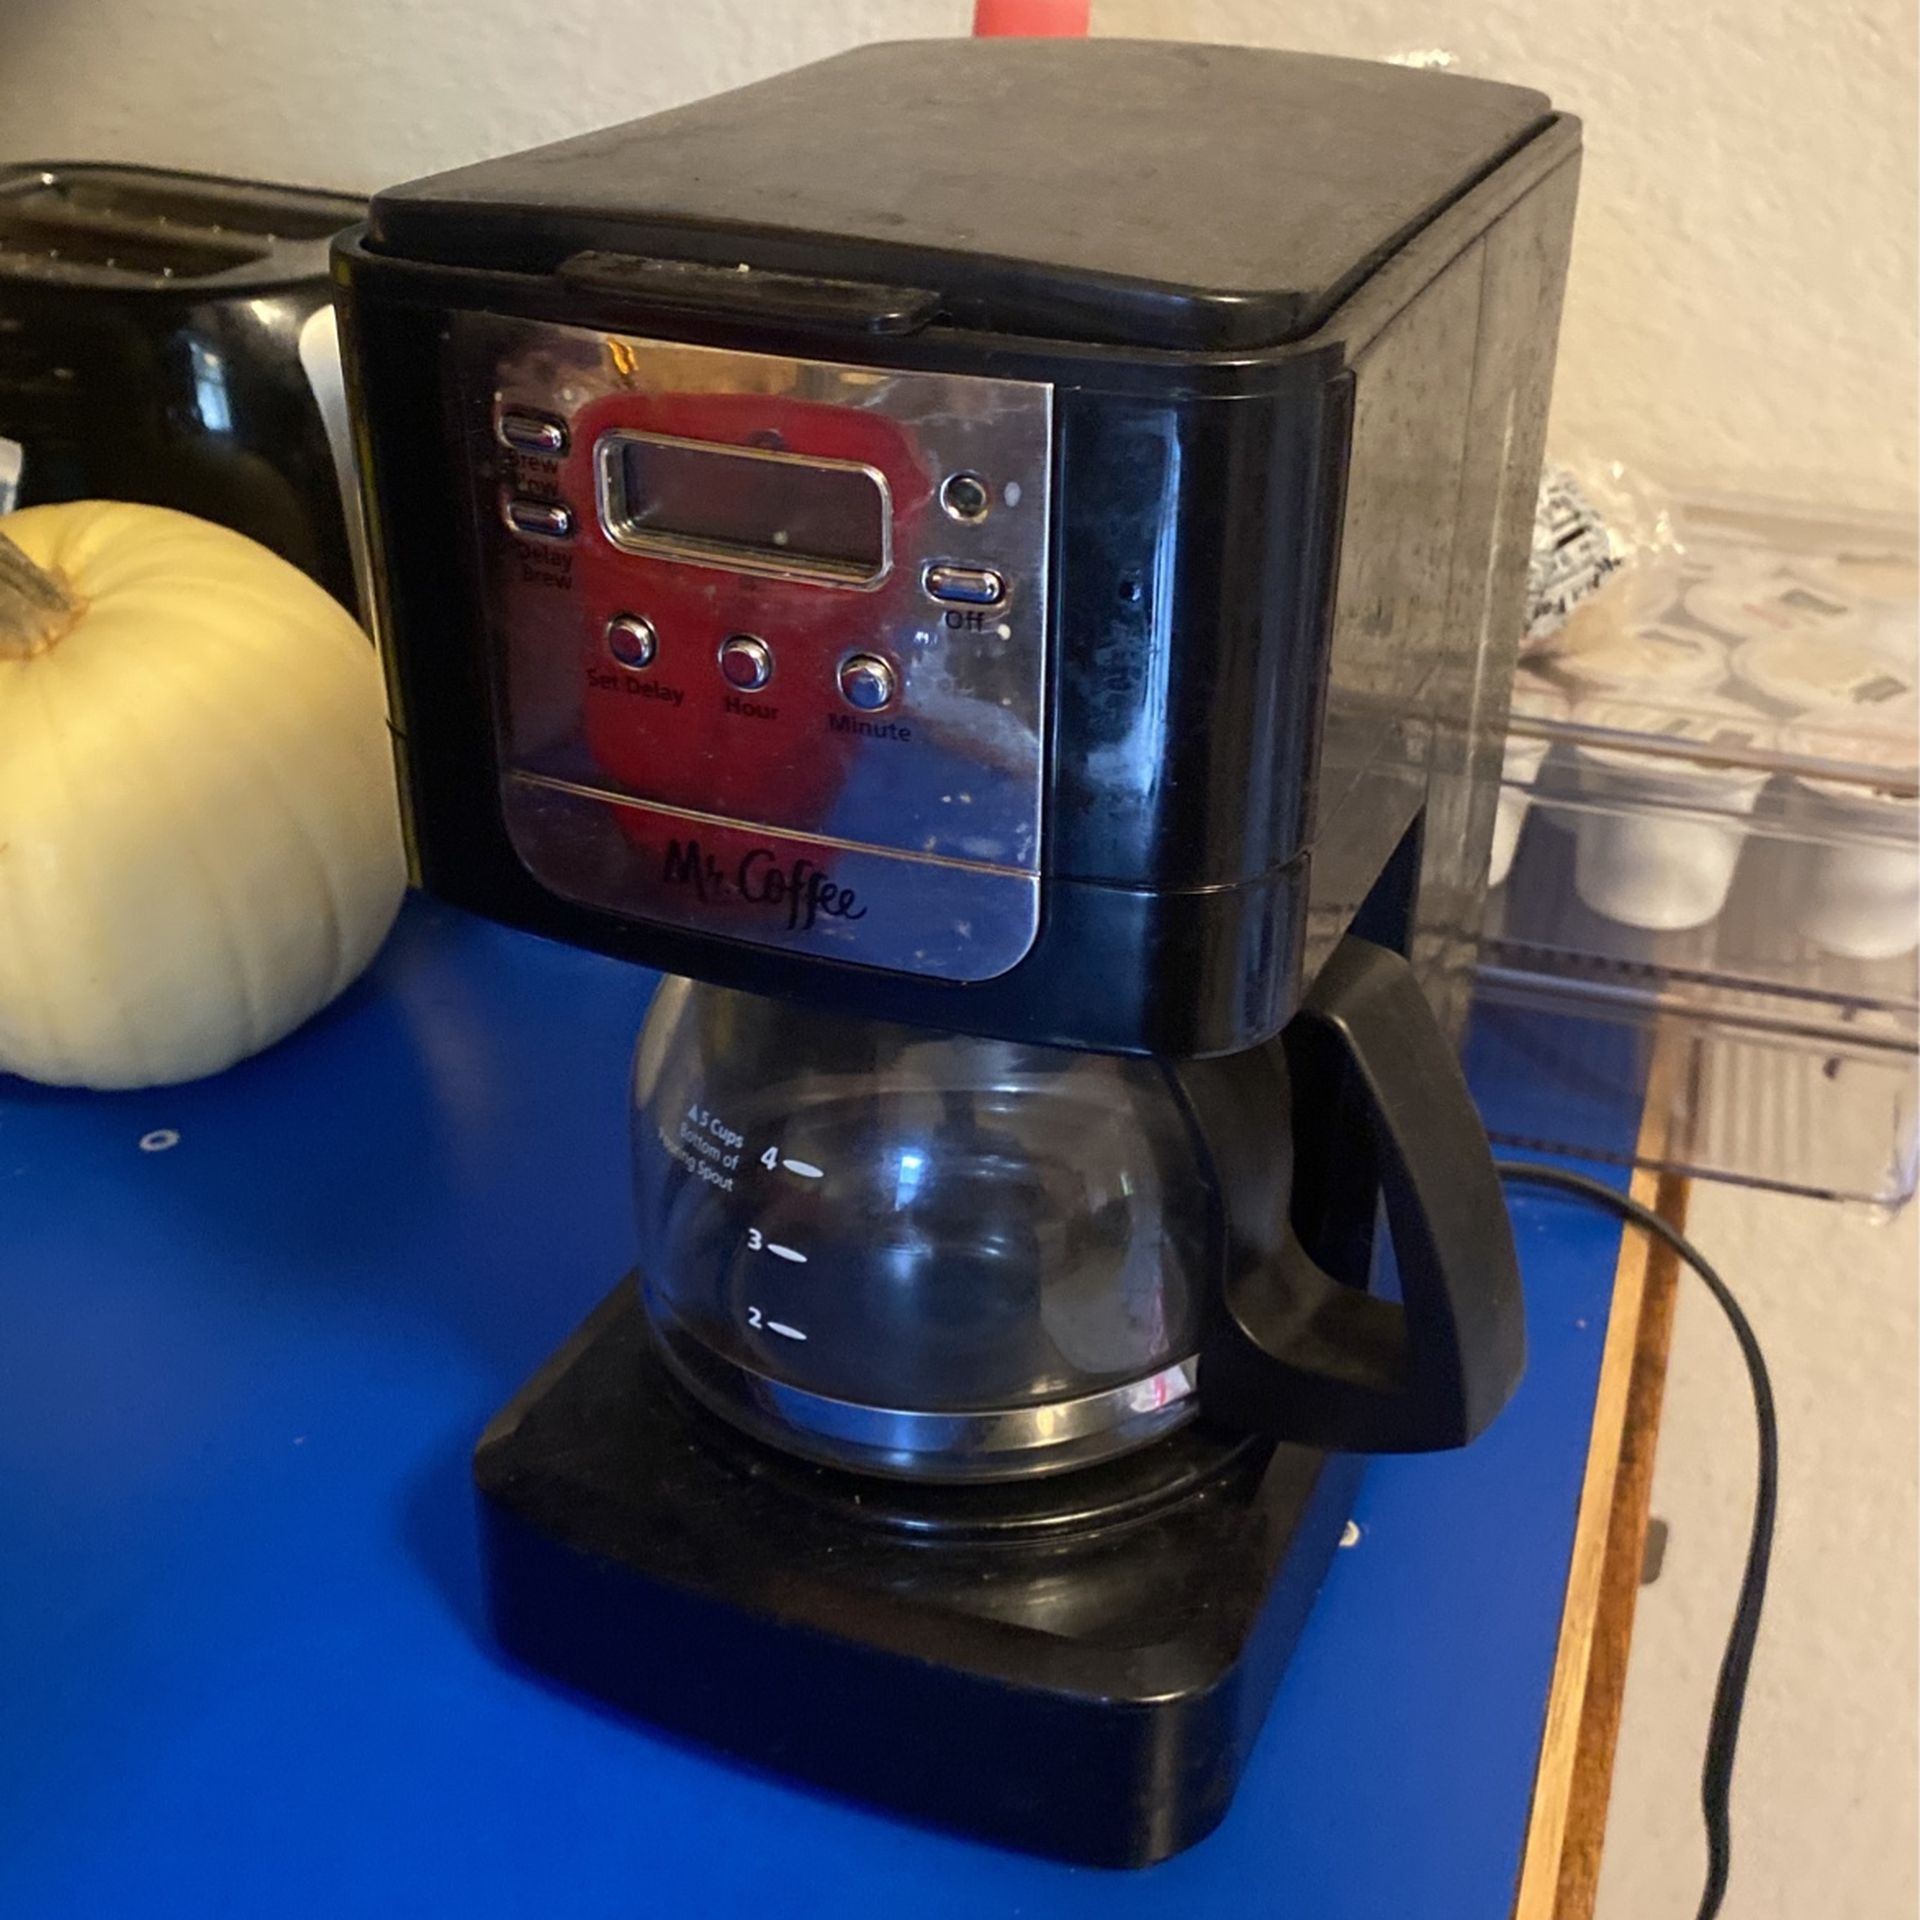 mr coffee coffee maker